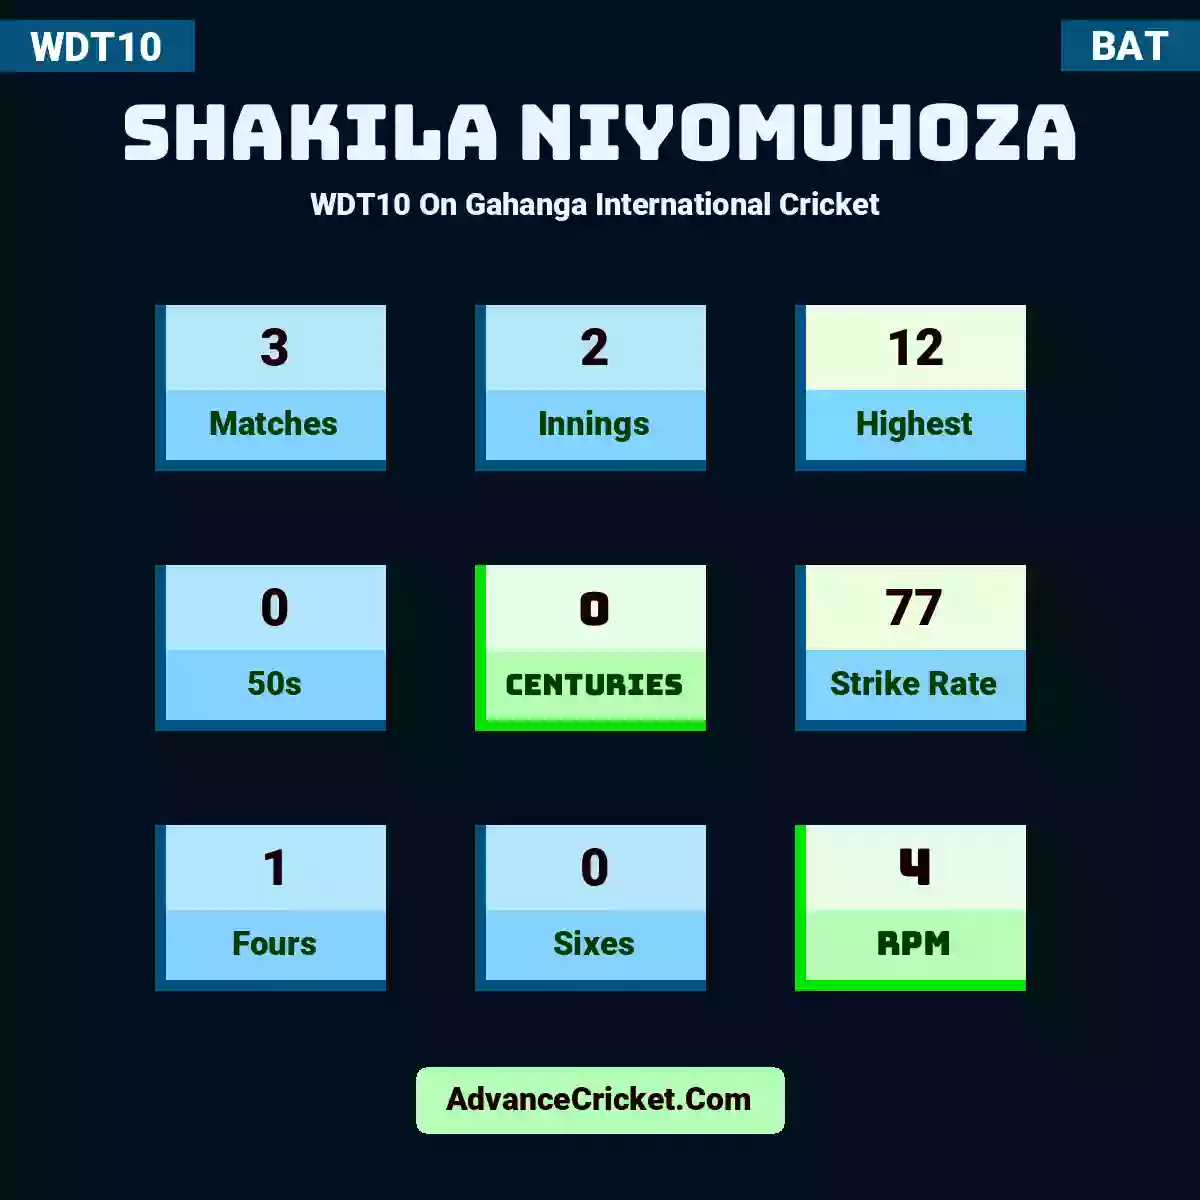 Shakila Niyomuhoza WDT10  On Gahanga International Cricket , Shakila Niyomuhoza played 3 matches, scored 12 runs as highest, 0 half-centuries, and 0 centuries, with a strike rate of 77. S.Niyomuhoza hit 1 fours and 0 sixes, with an RPM of 4.